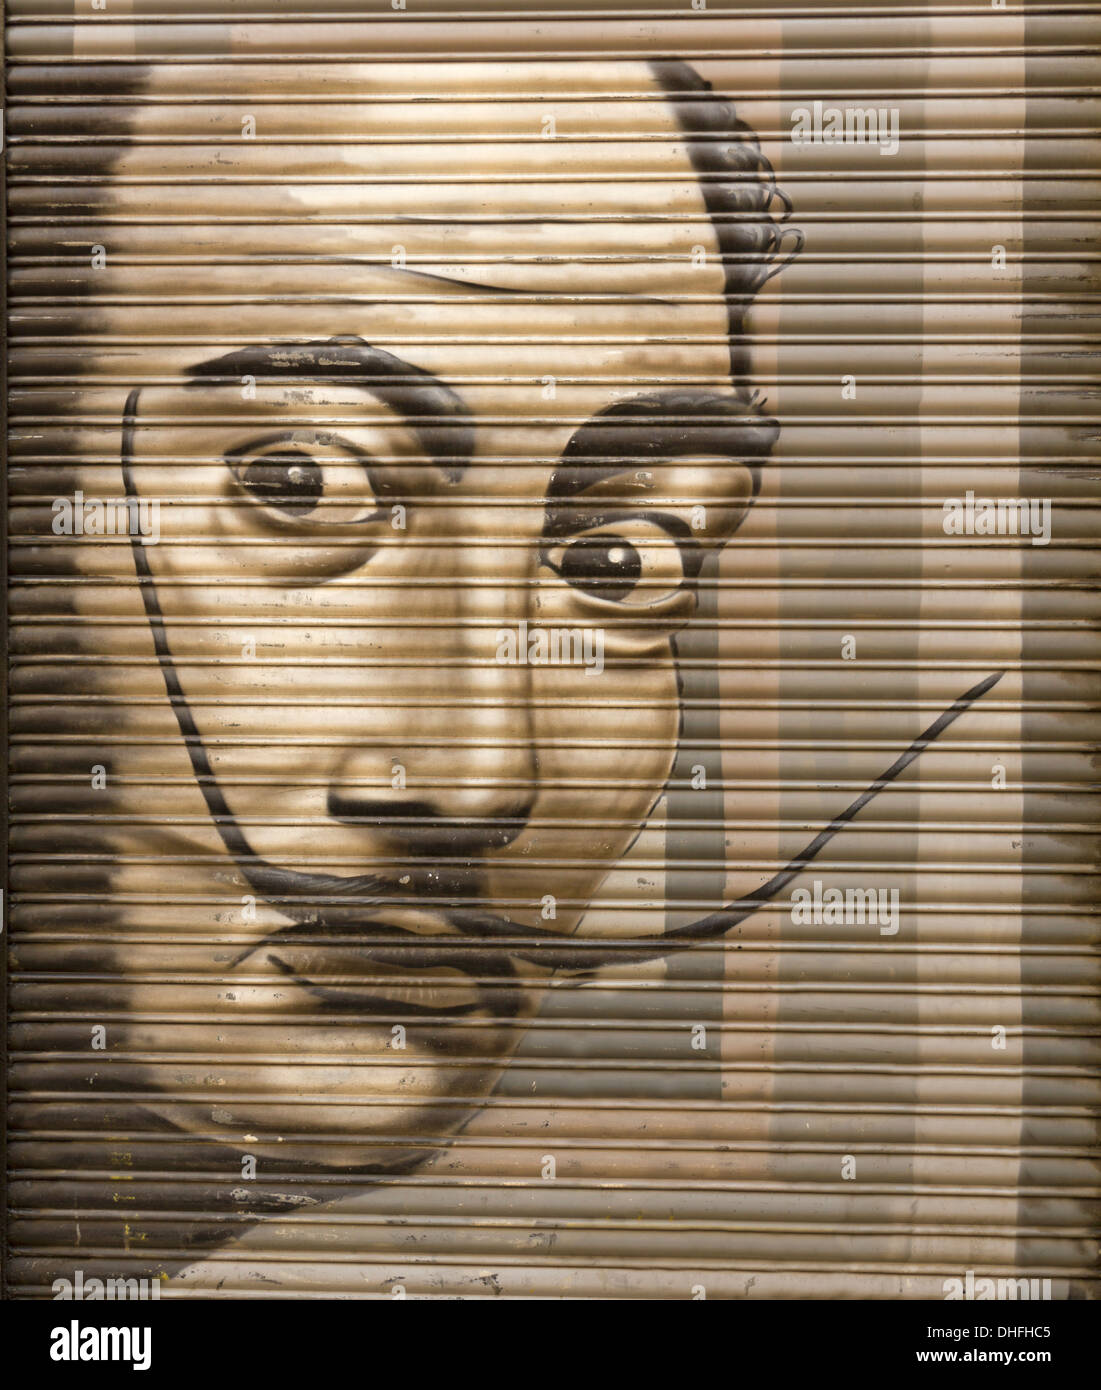 Tribute to Salvador Dali in a metal shutter, Barcelona, Spain Stock Photo